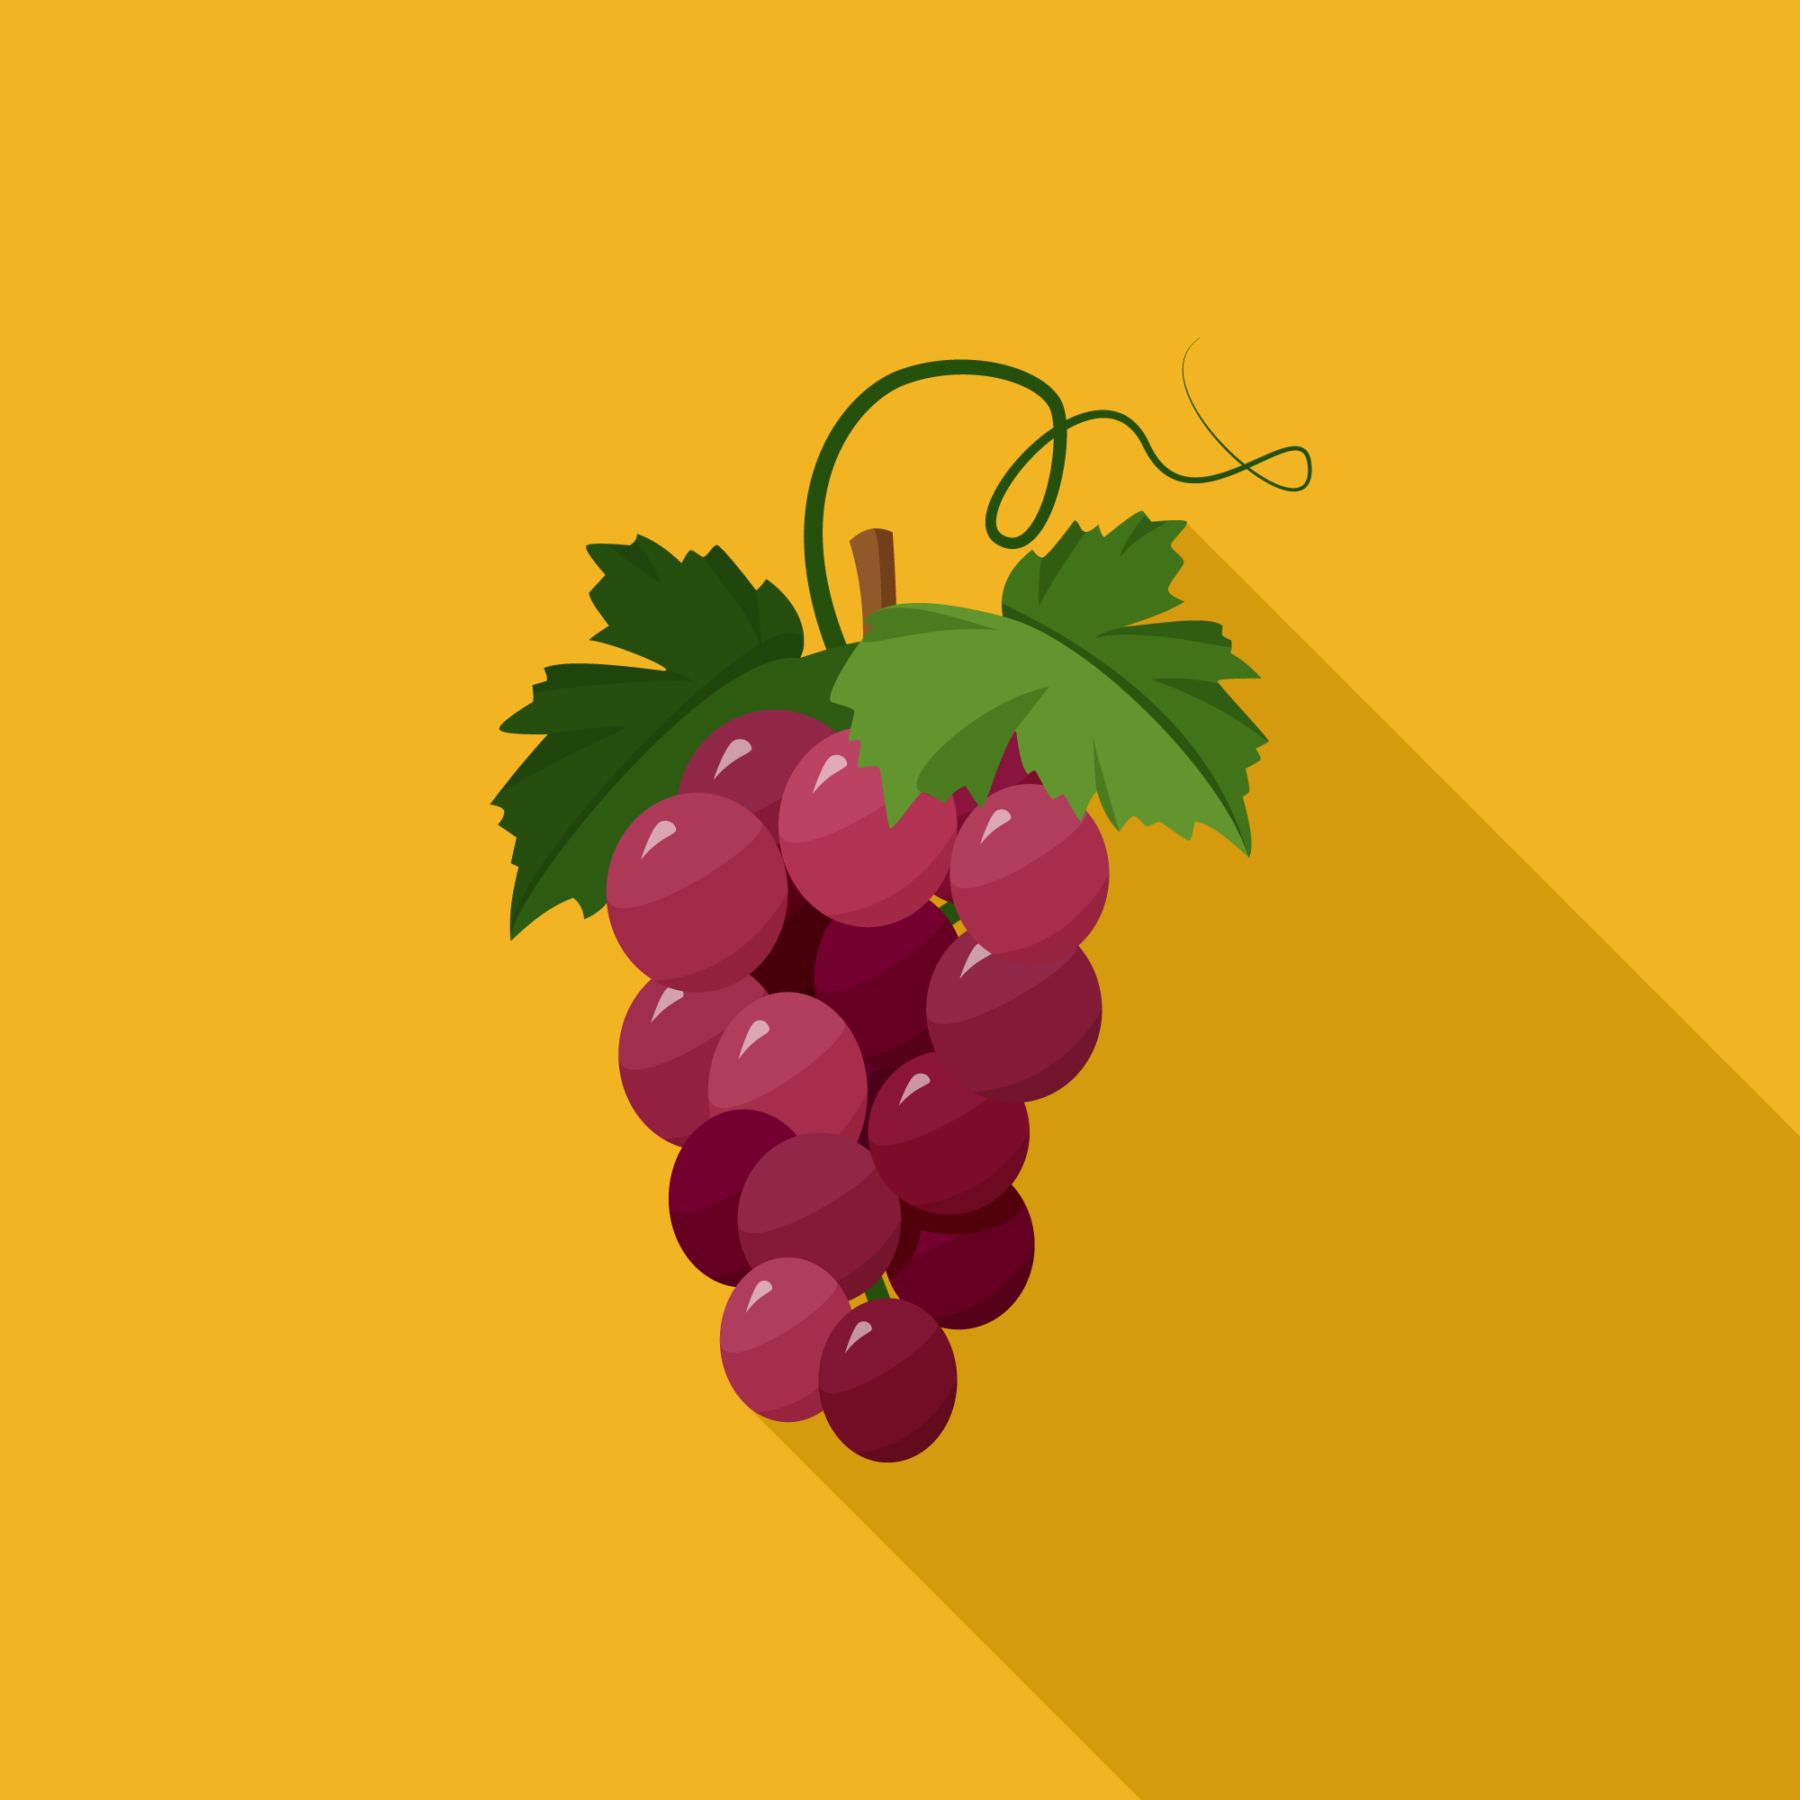 jason-b-graham-grape-icon-f2b523-featured-image